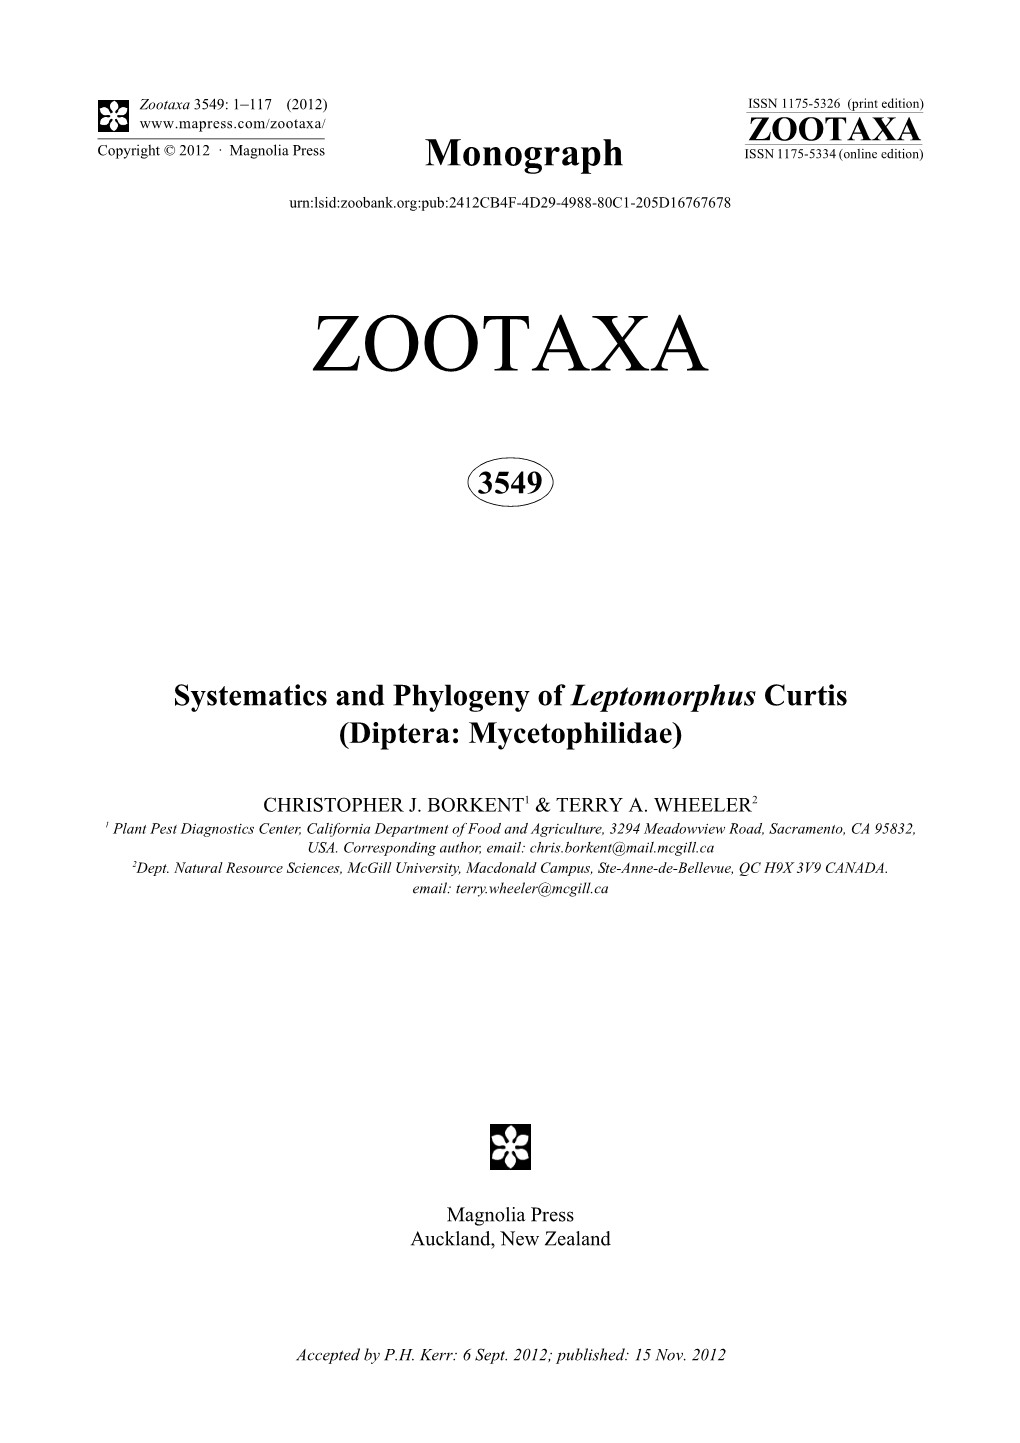 Zootaxa 3549: 1–117 (2012) ISSN 1175-5326 (Print Edition) ZOOTAXA Copyright © 2012 · Magnolia Press Monograph ISSN 1175-5334 (Online Edition)